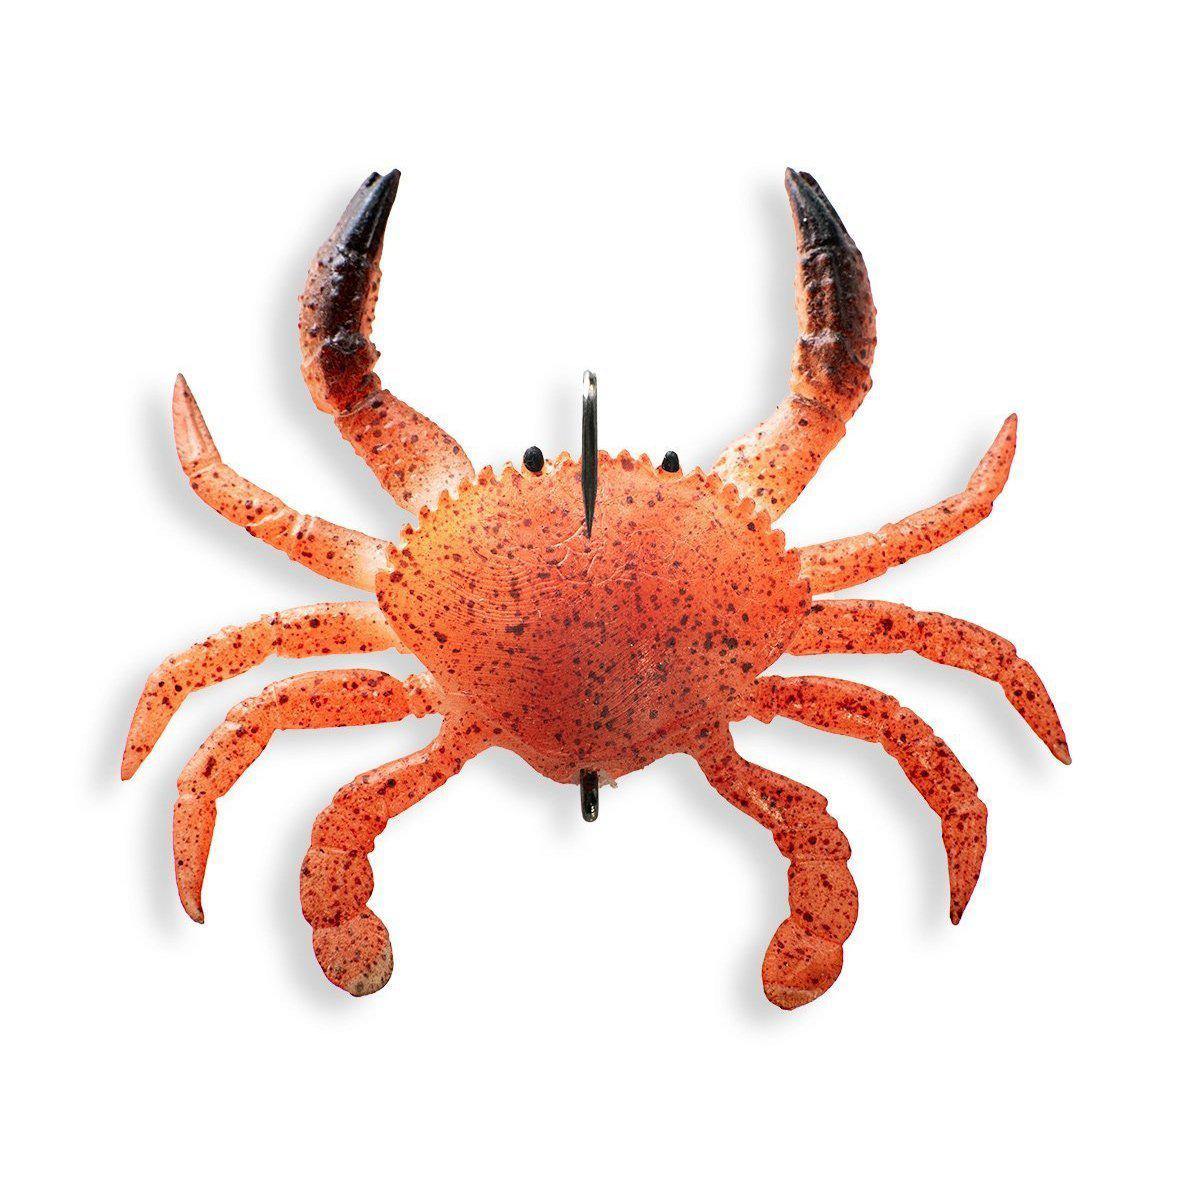 Leurre Chasebaits Crusty Crab 50mm (Leurre Créature pour Pêches